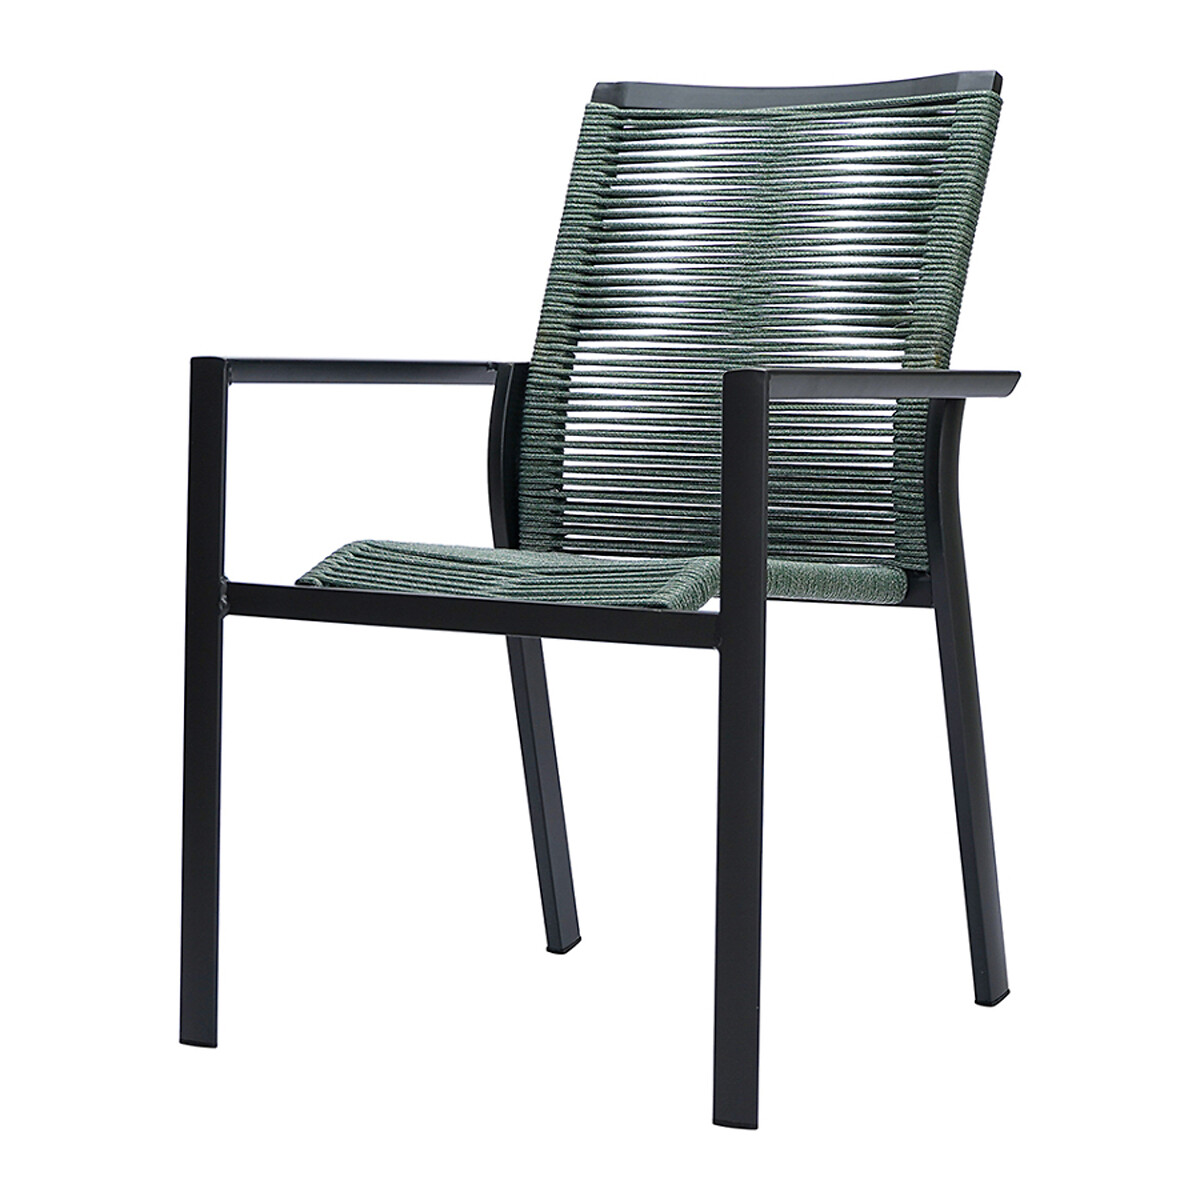 Стул Paulsen серо-зеленый единый размер серый стул пиза единый размер зеленый